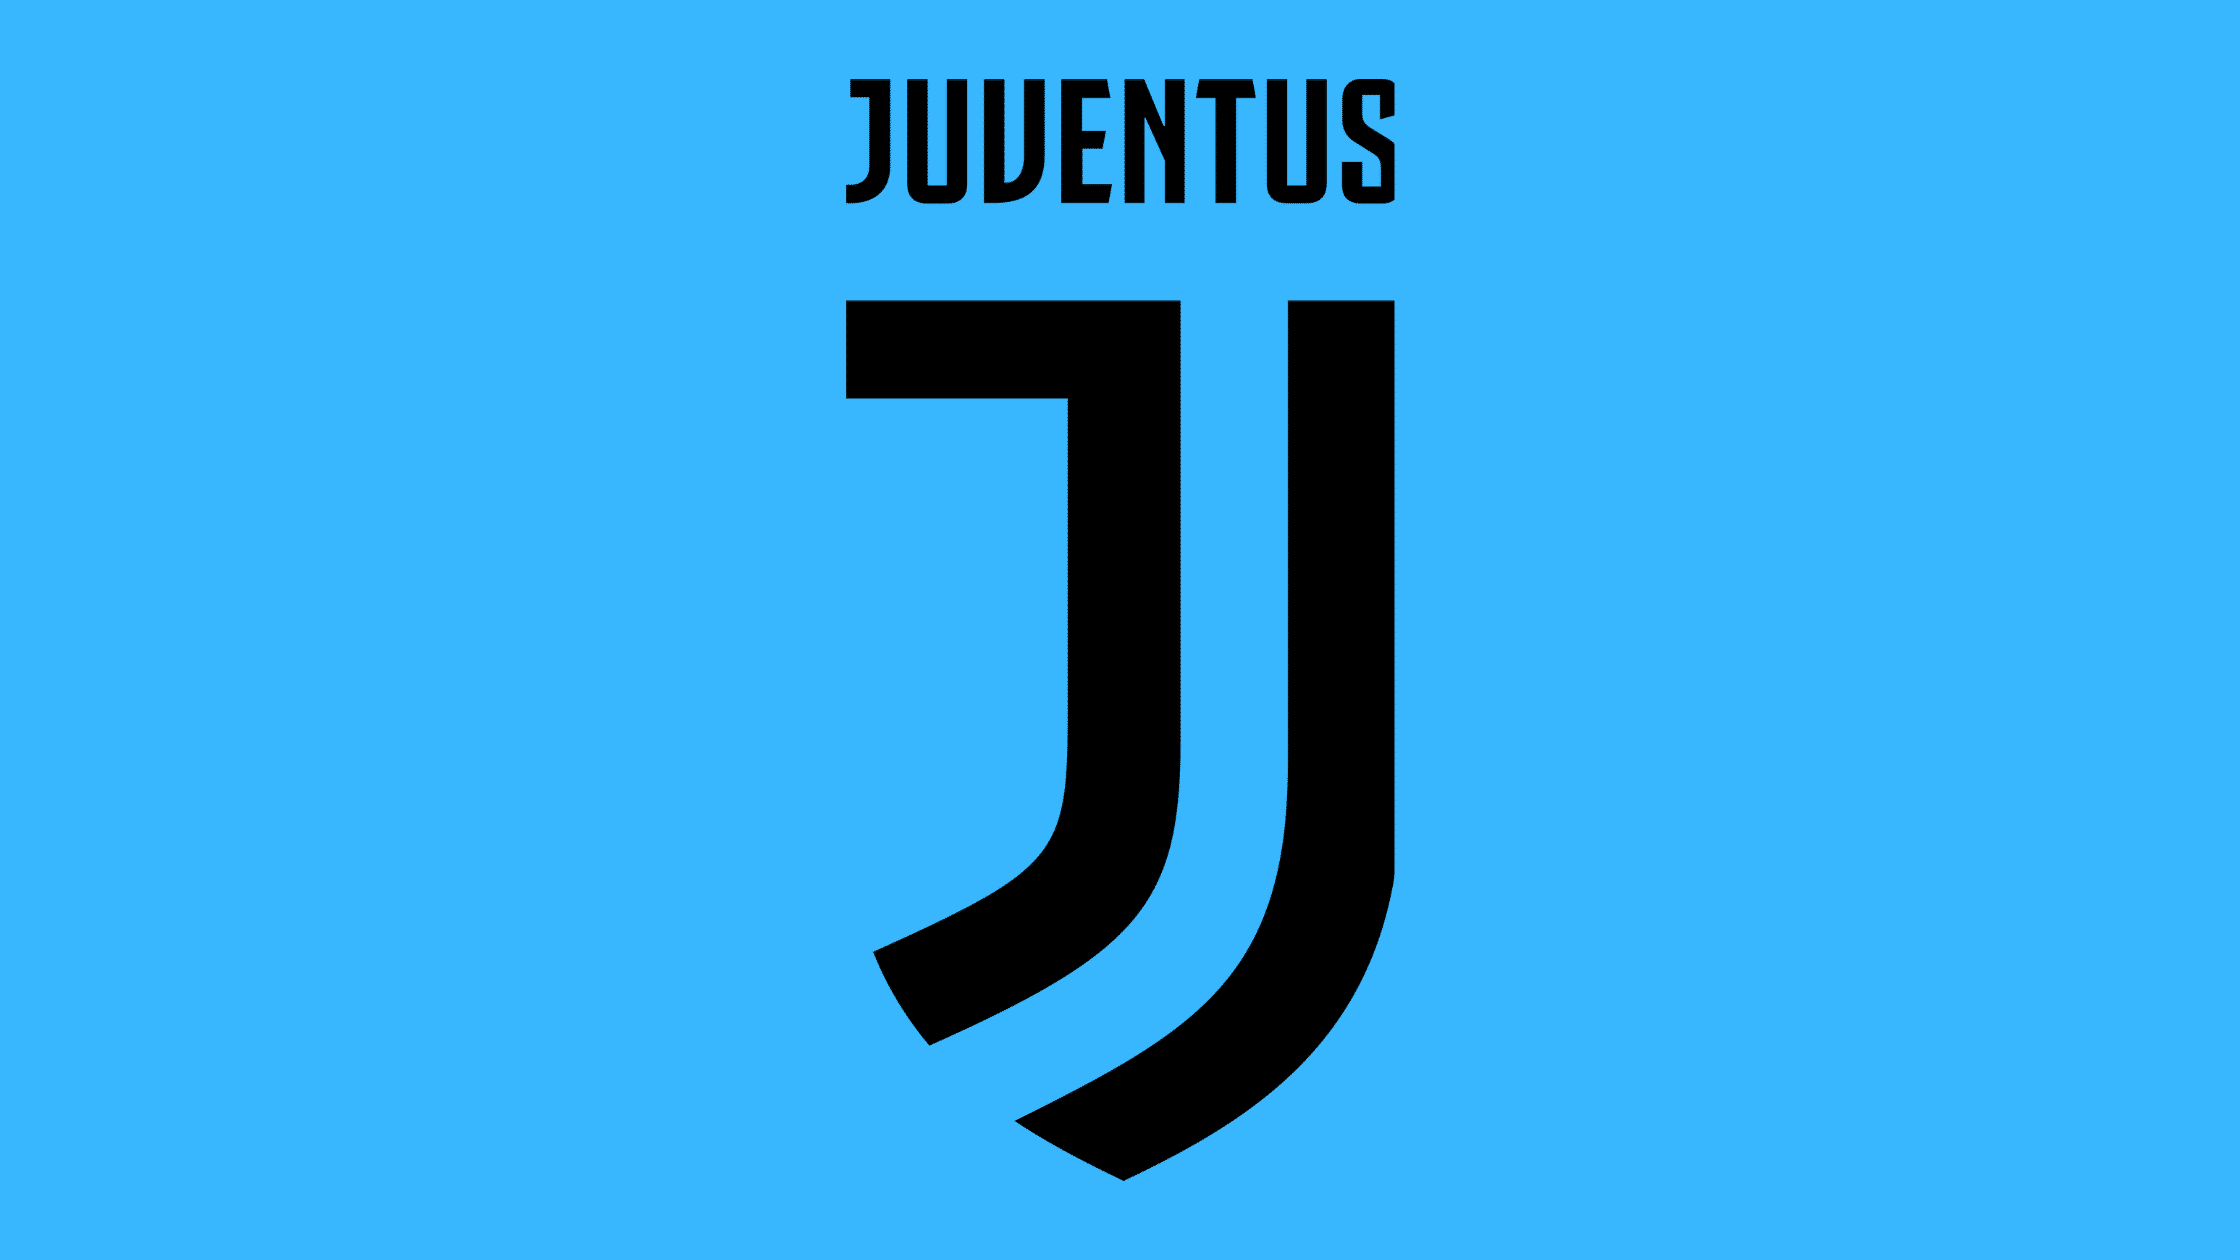 Juventus Turin, Juve: Spiele, heute, live, TV-Übertragung, Live-Stream, Stream, Live-Ticker, Ticker Sky, DAZN, Champions League, Serie A, Cristiano Ronaldo, CR7.